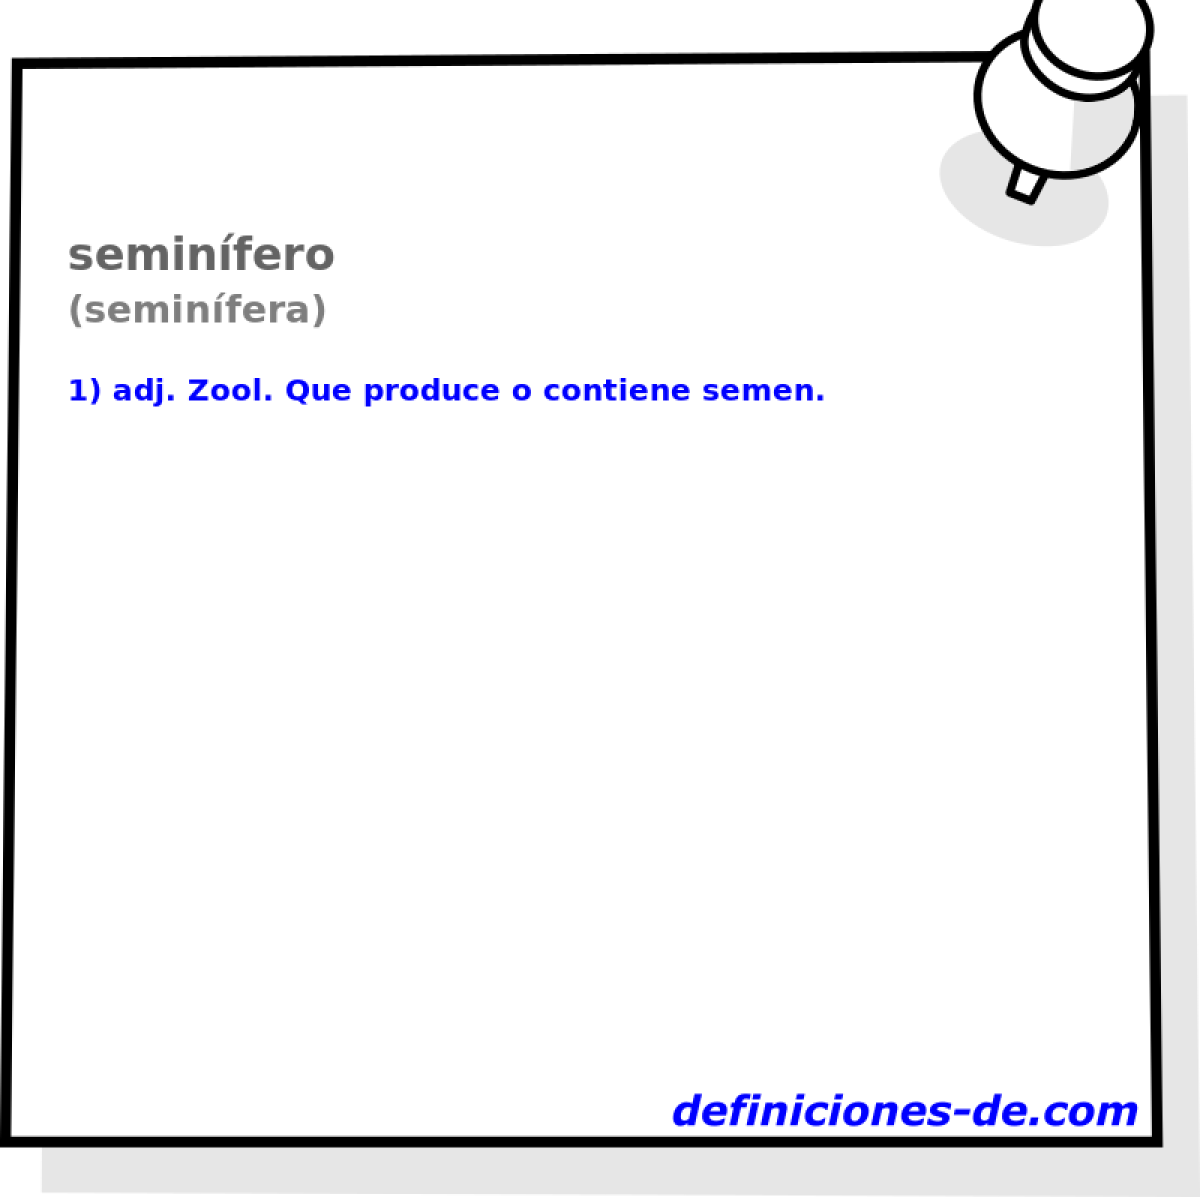 seminfero (seminfera)